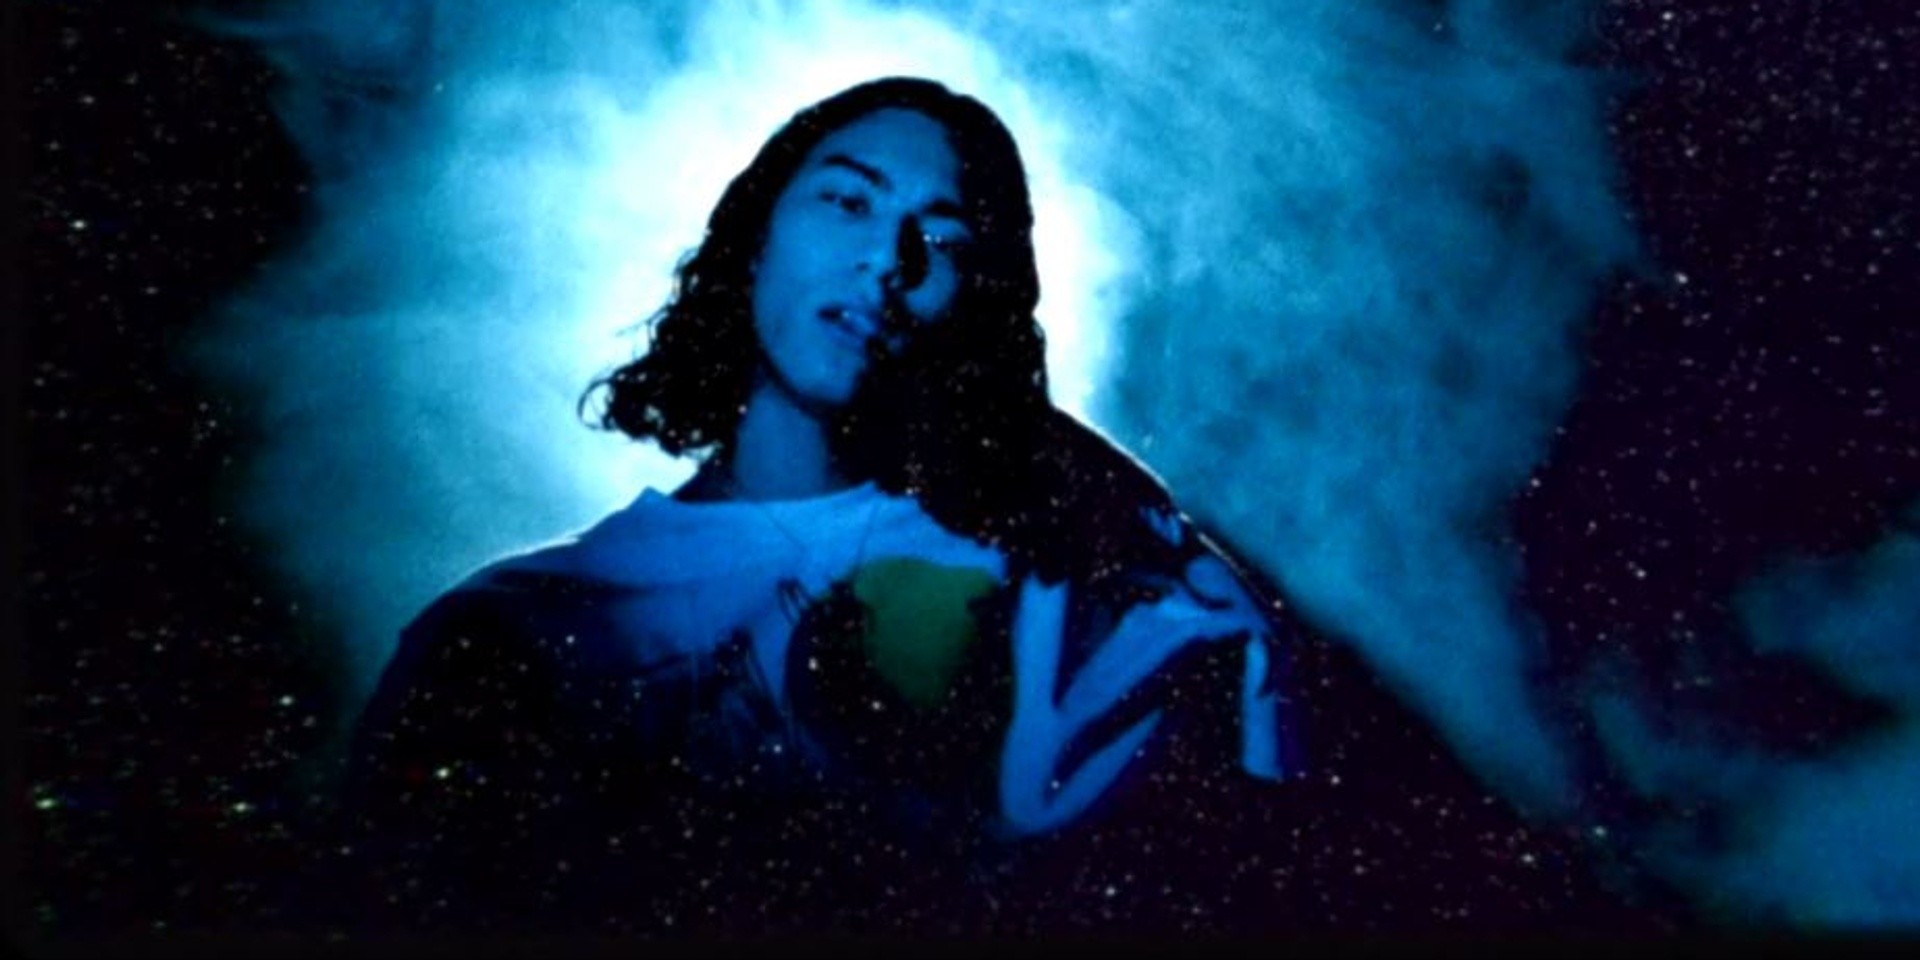 Jason Dhakal & dot.jaime unveil 'U' music video – watch